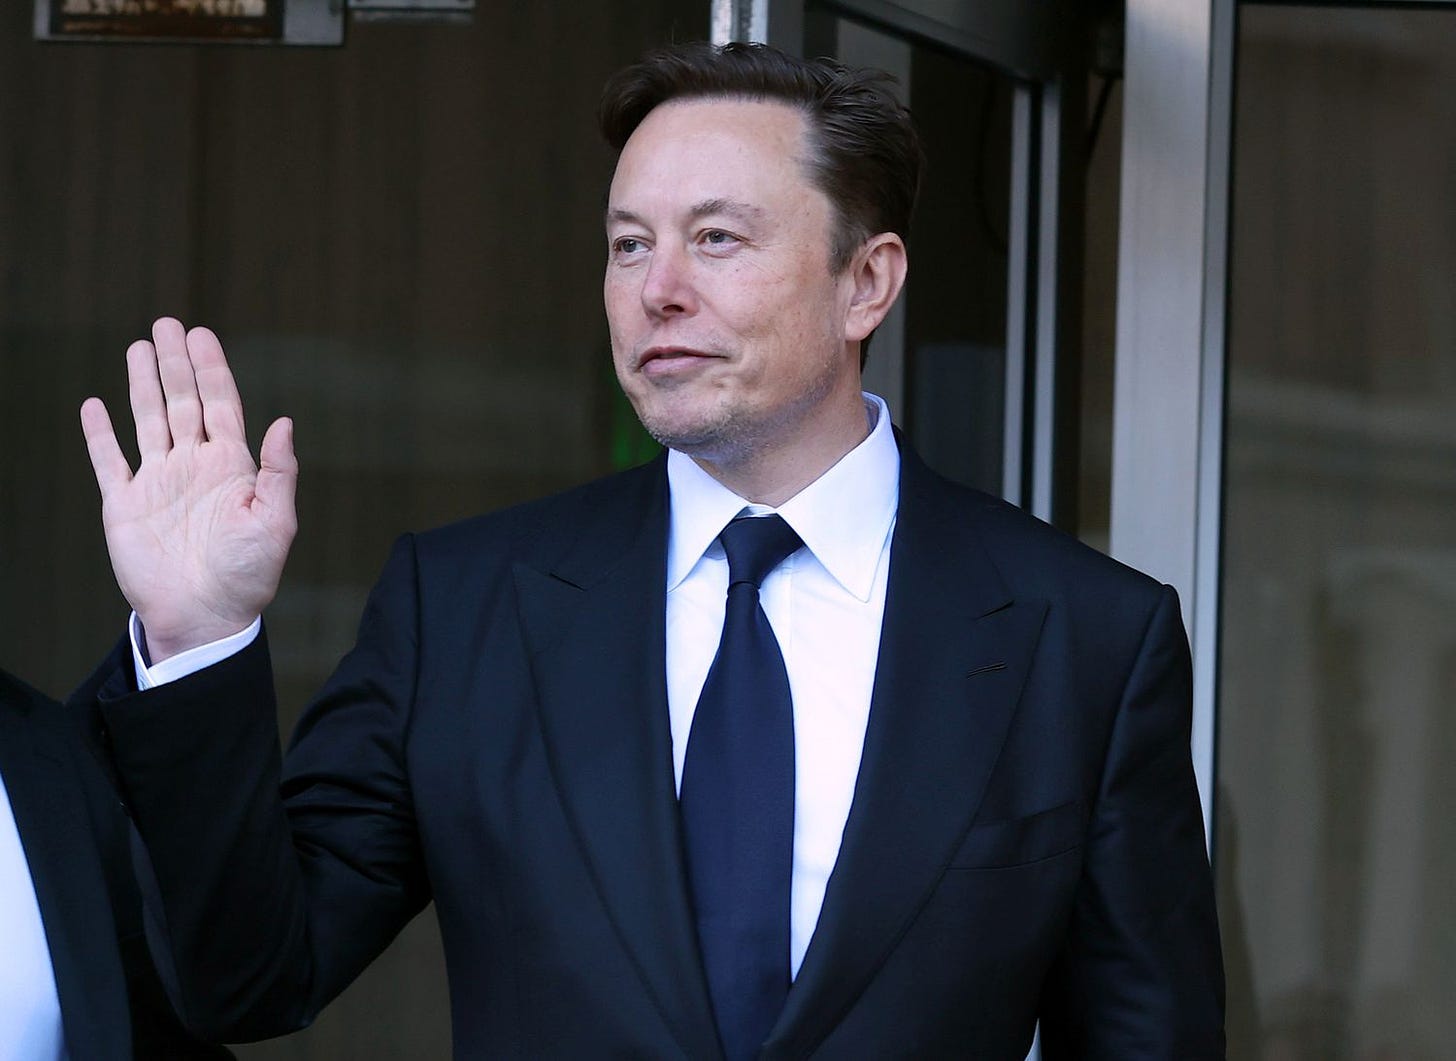 Elon Musk Has Rebranded Twitter to 'X'—Here's Musk's Net Worth